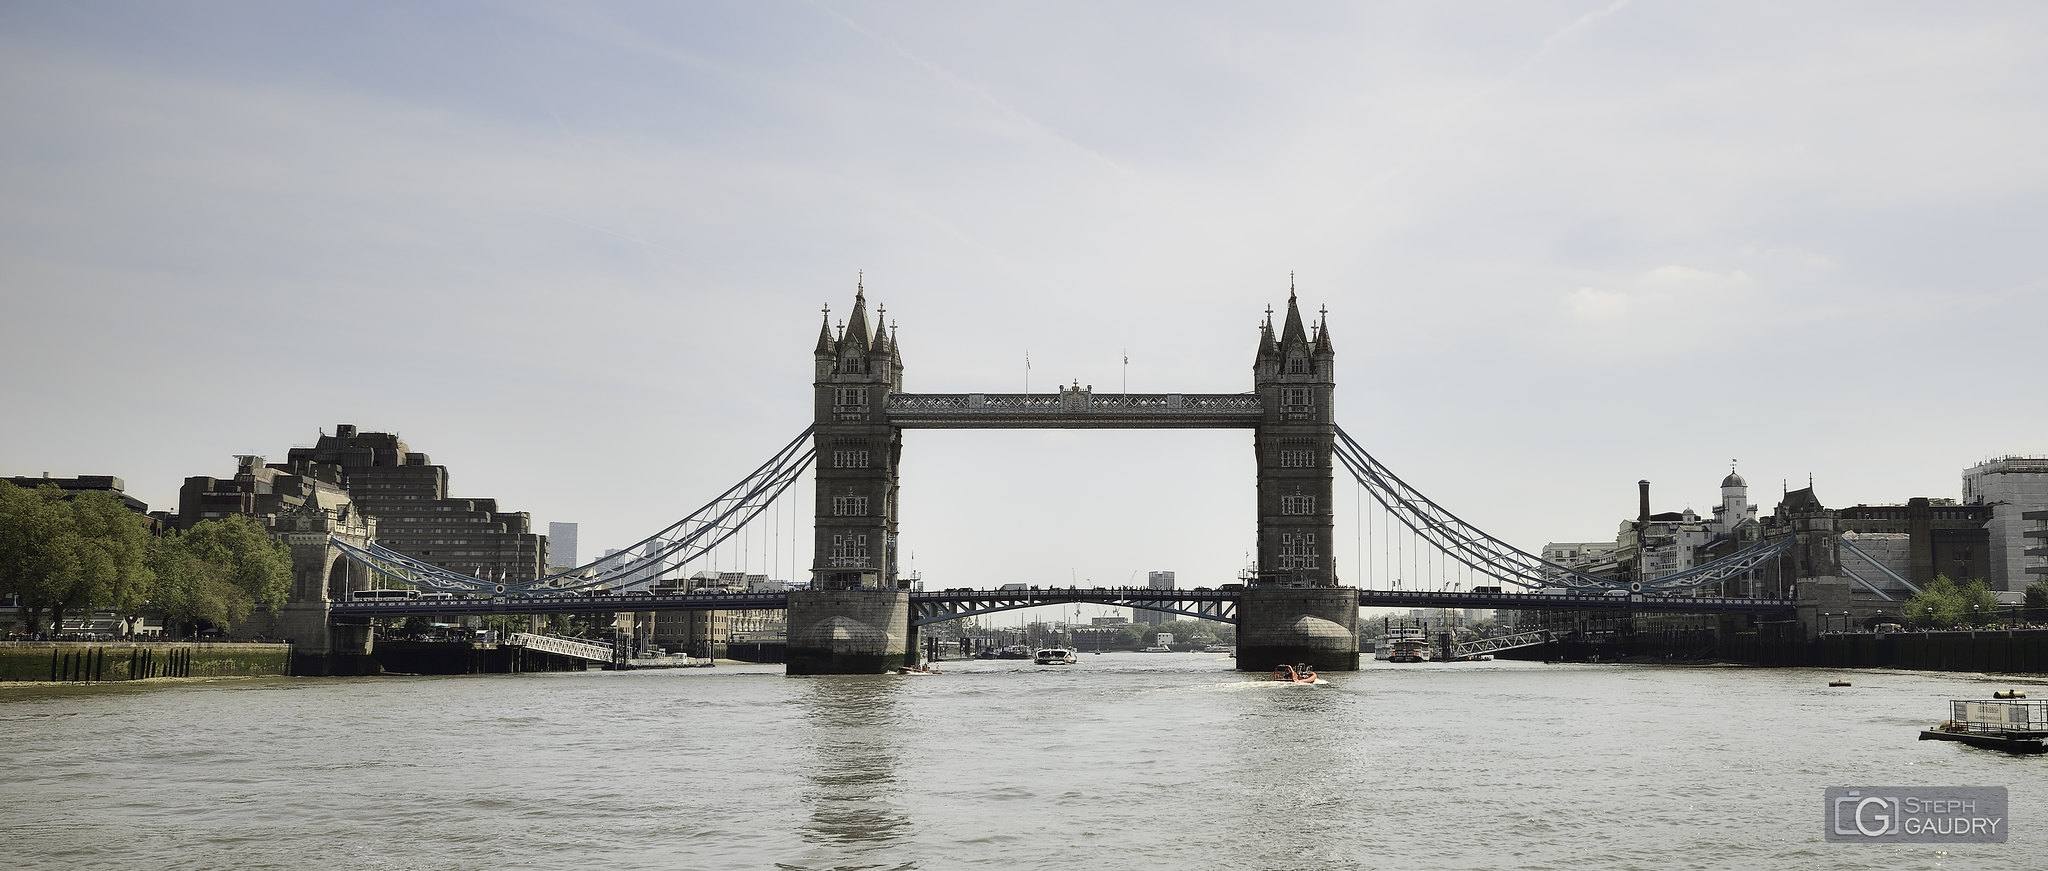 London tower bridge - from the Thames [Klik om de diavoorstelling te starten]